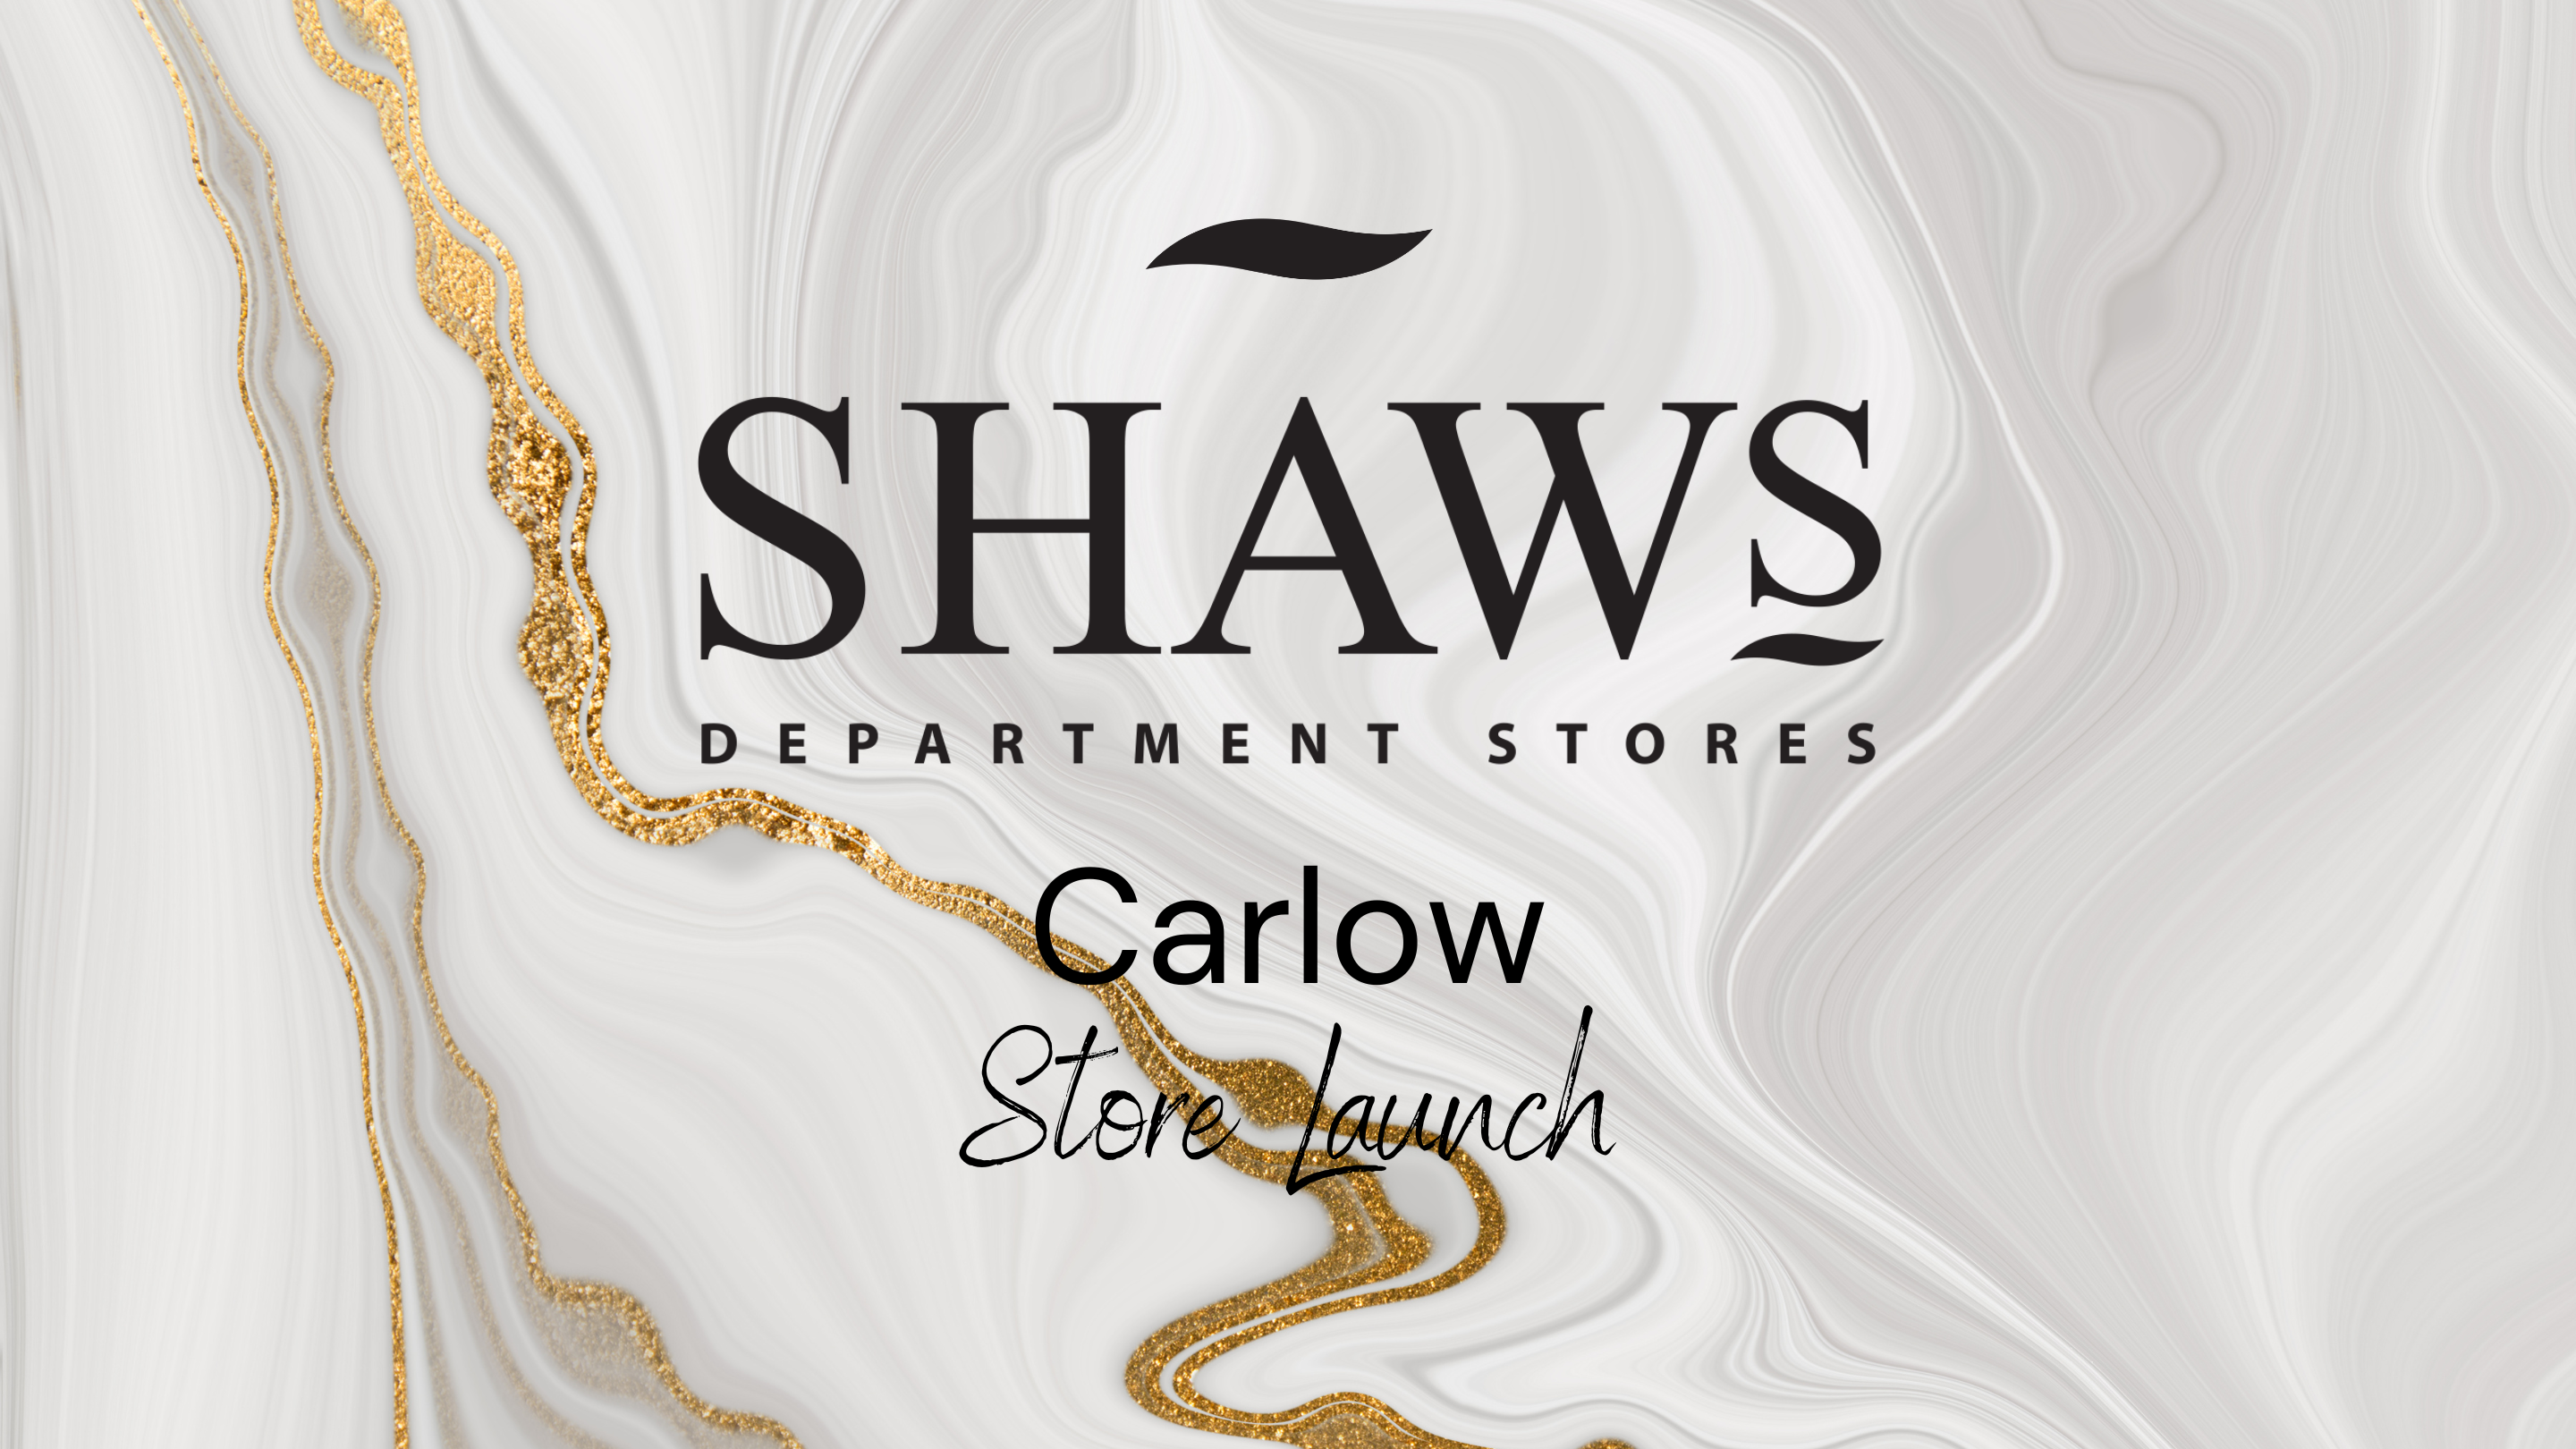 Load video: Shaws Carlow Store Walk